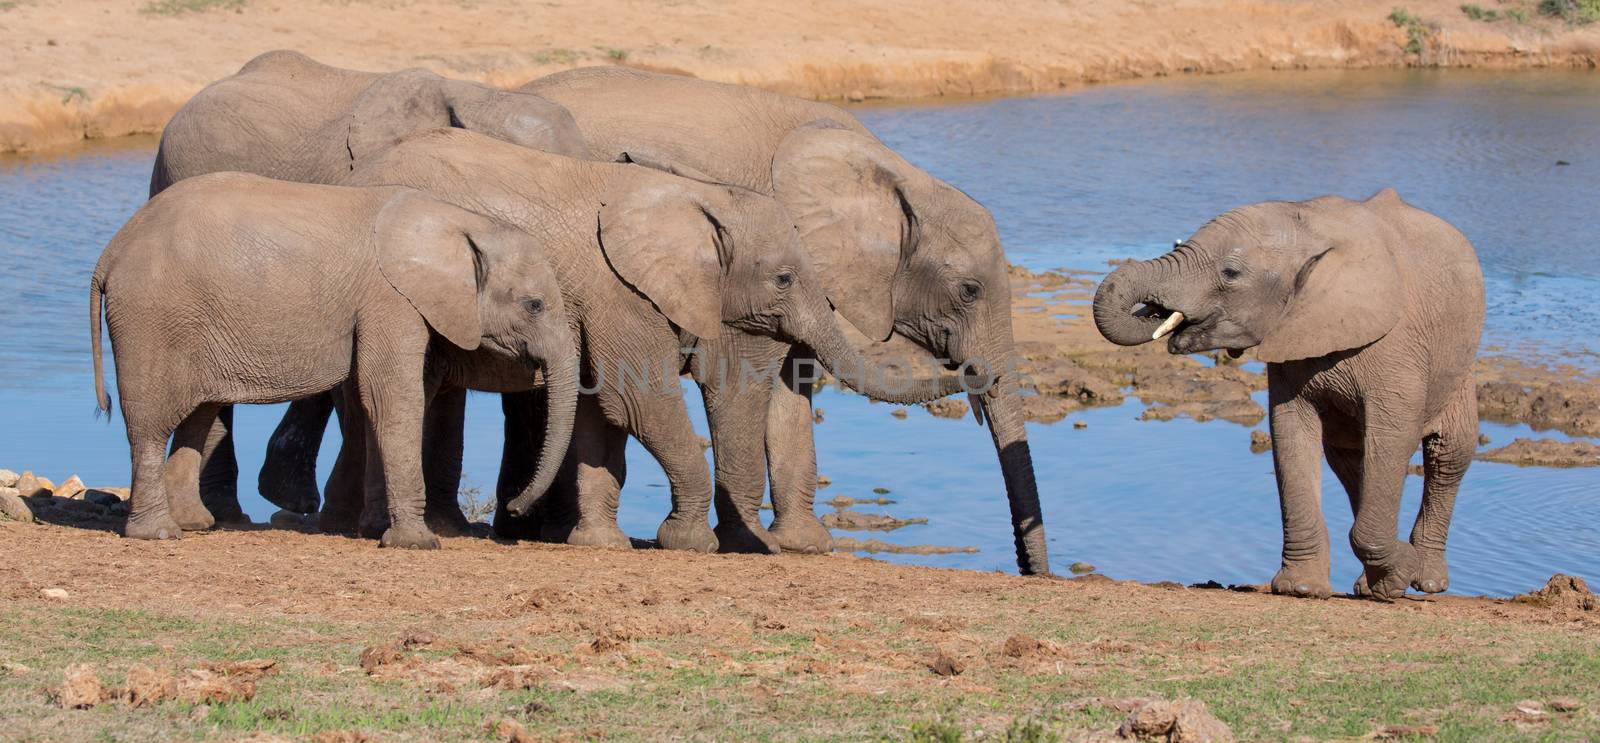 Elephant friends drinking at a waterhole in Africa